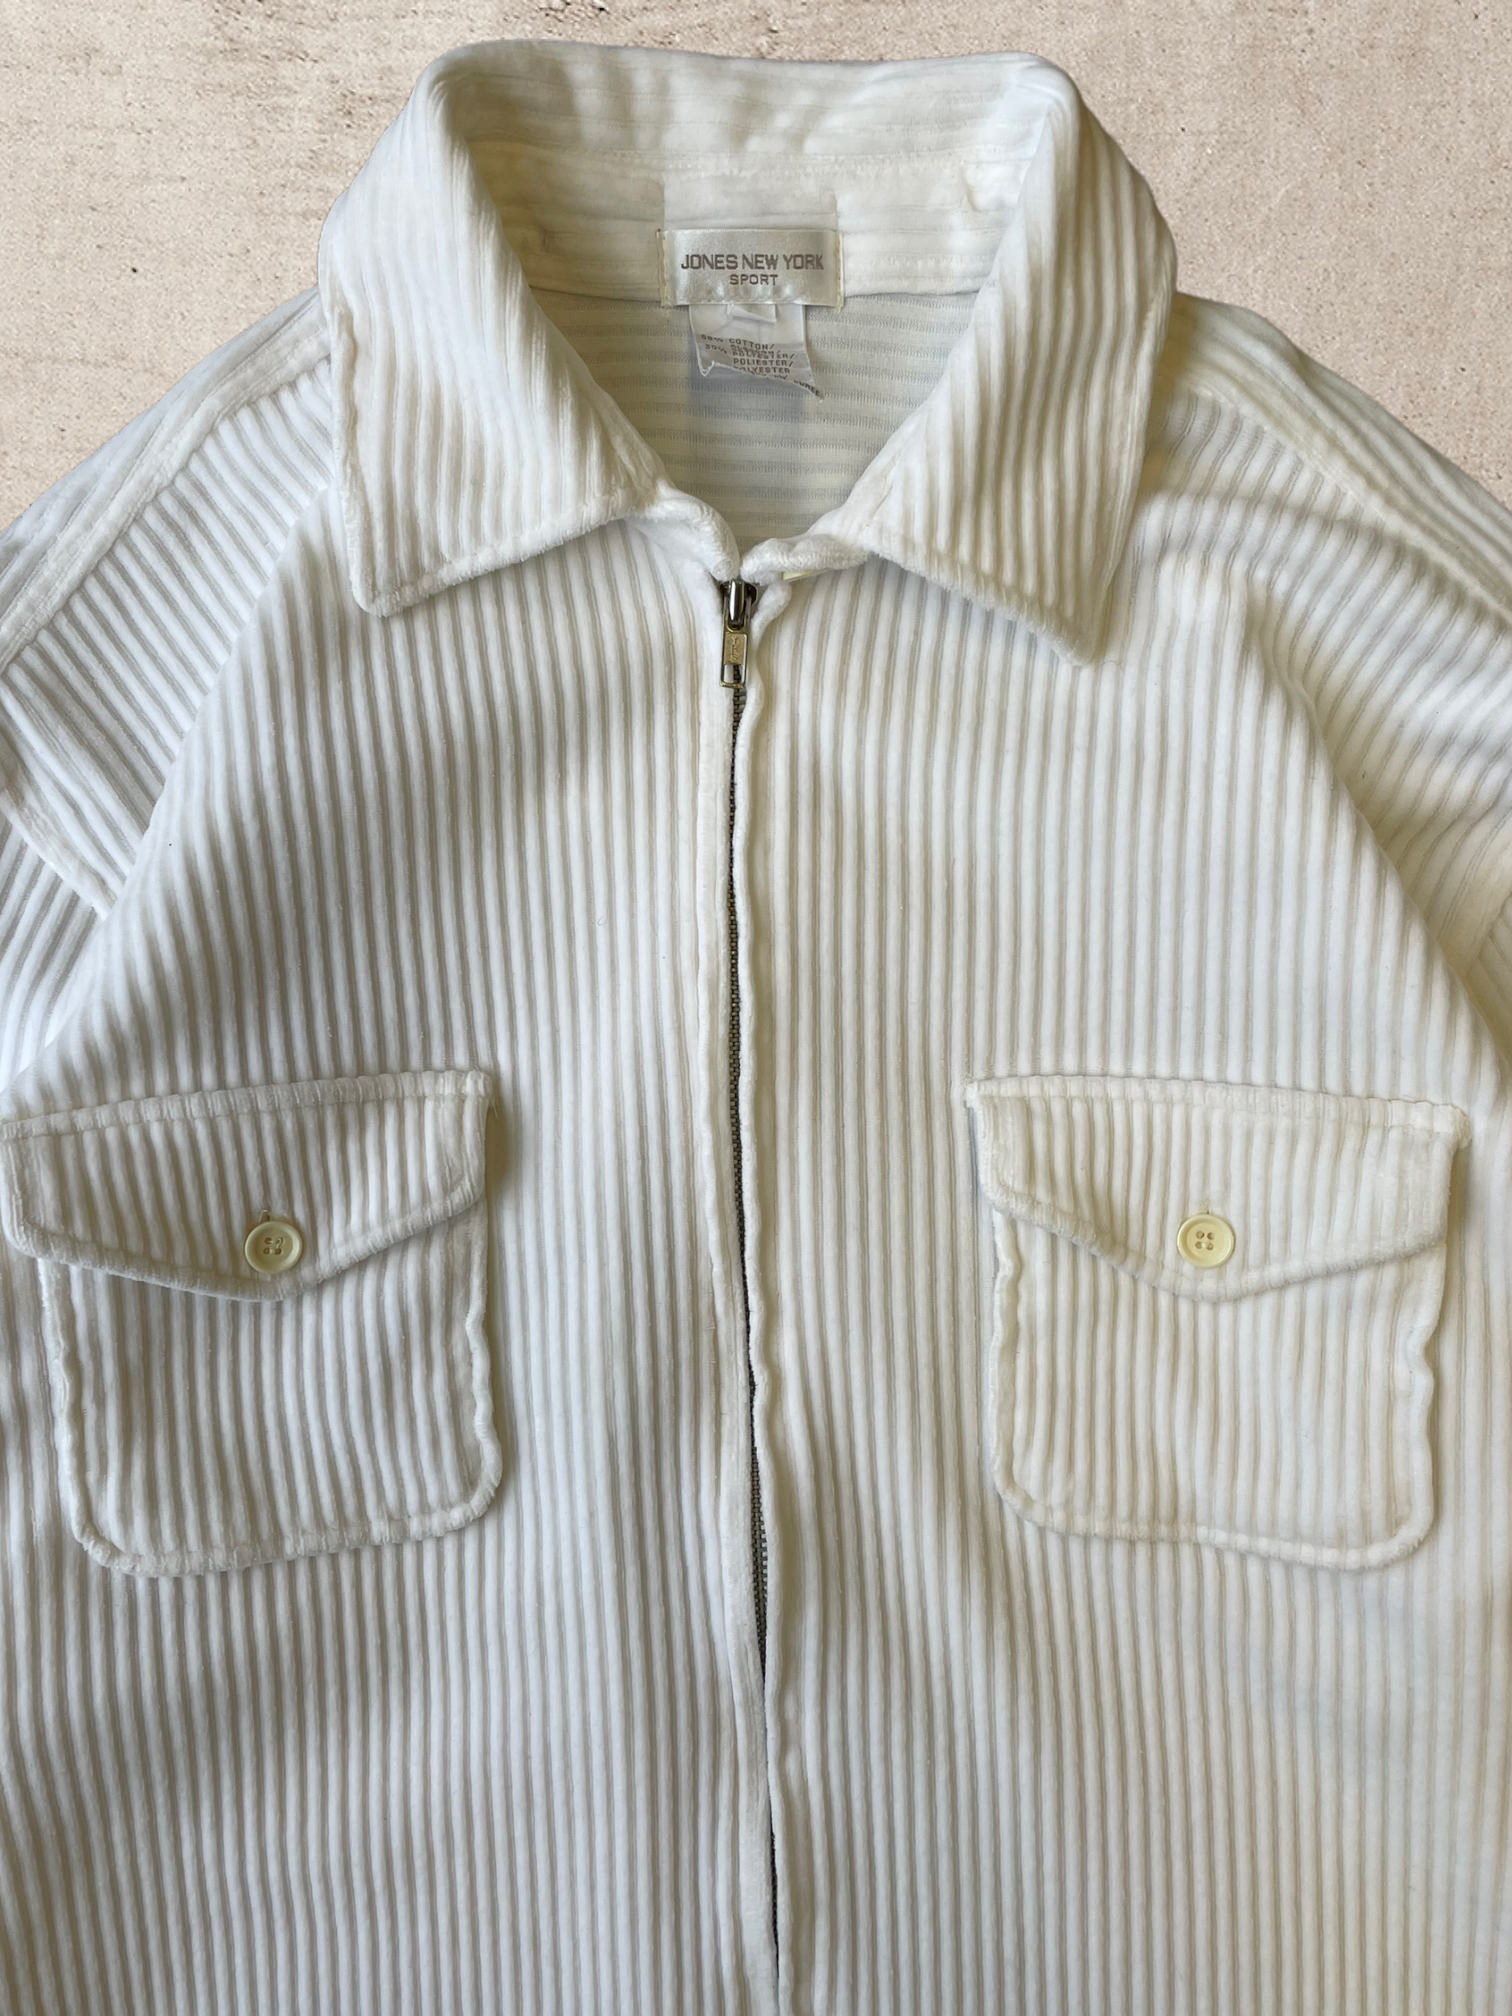 Vintage Corduroy Zip up Jacket - Large